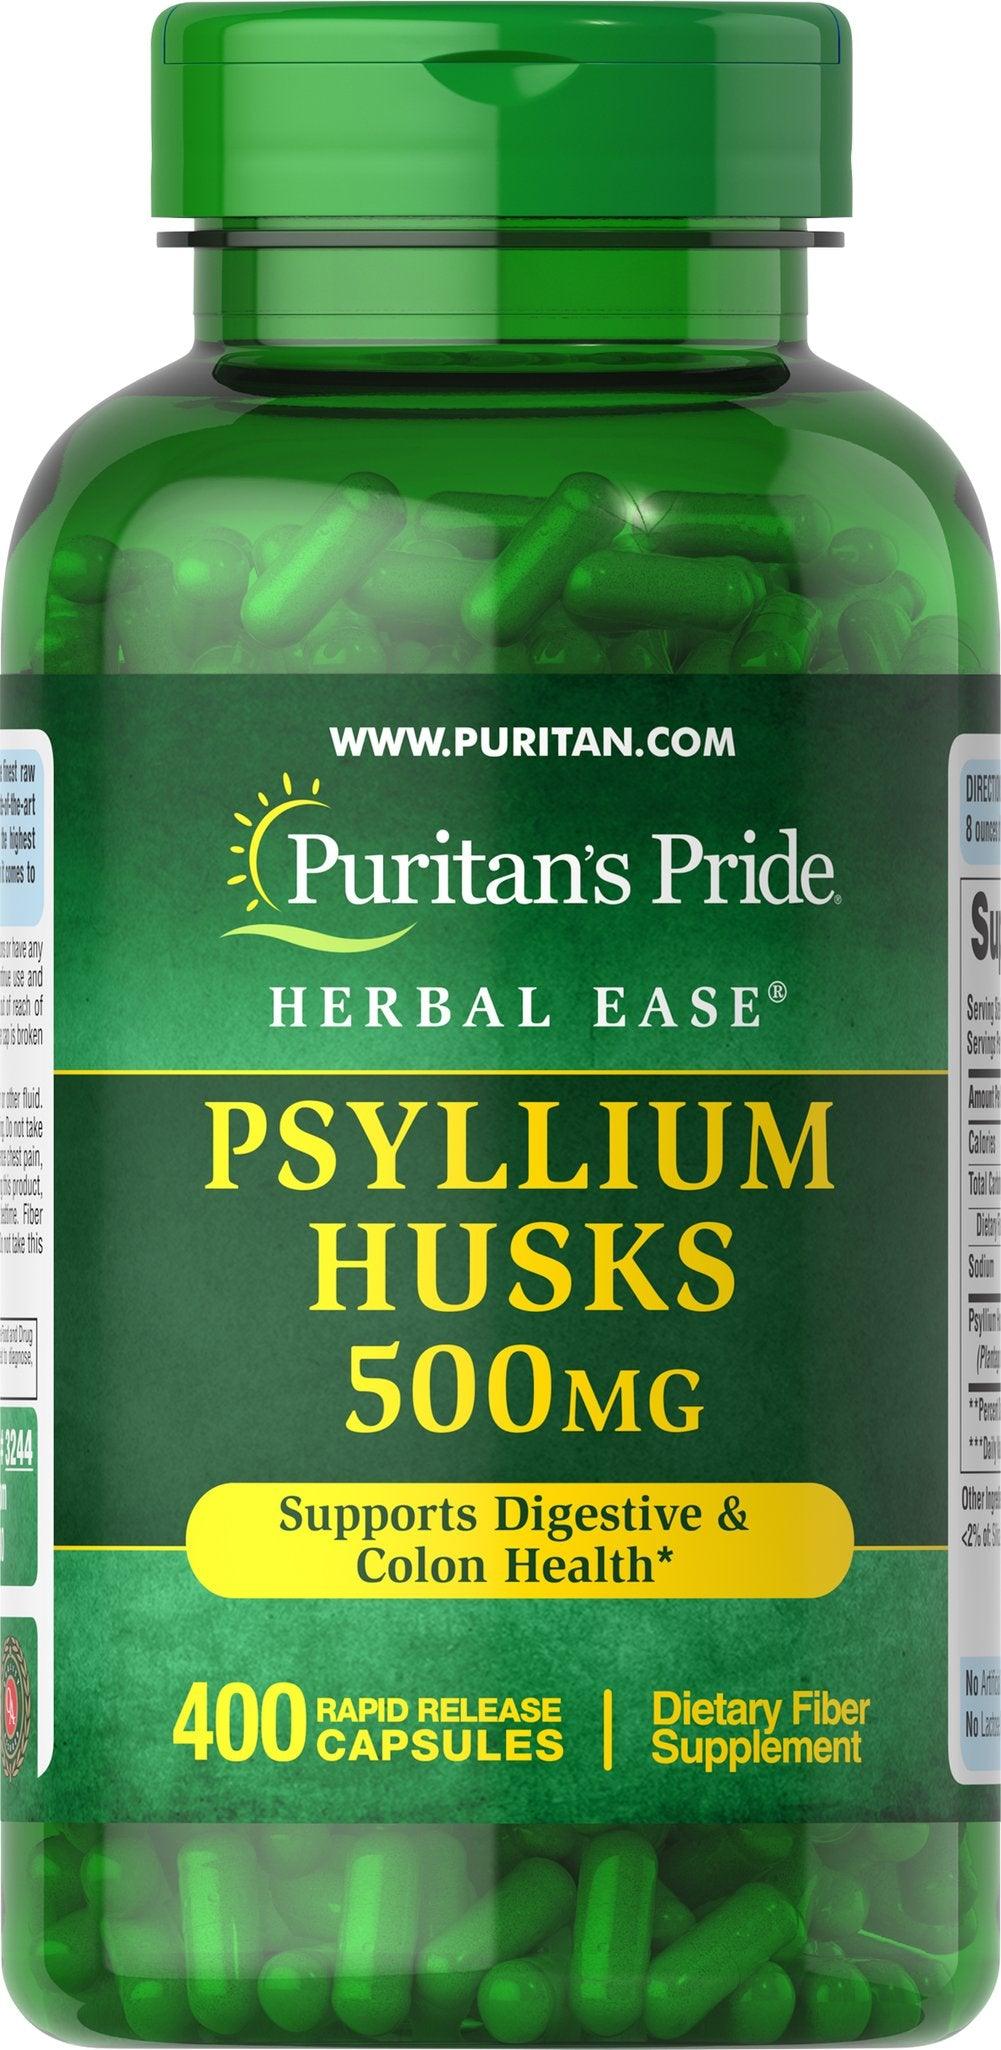 Puritan's Pride Psyllium Husks 500mg - mondialpharma.com